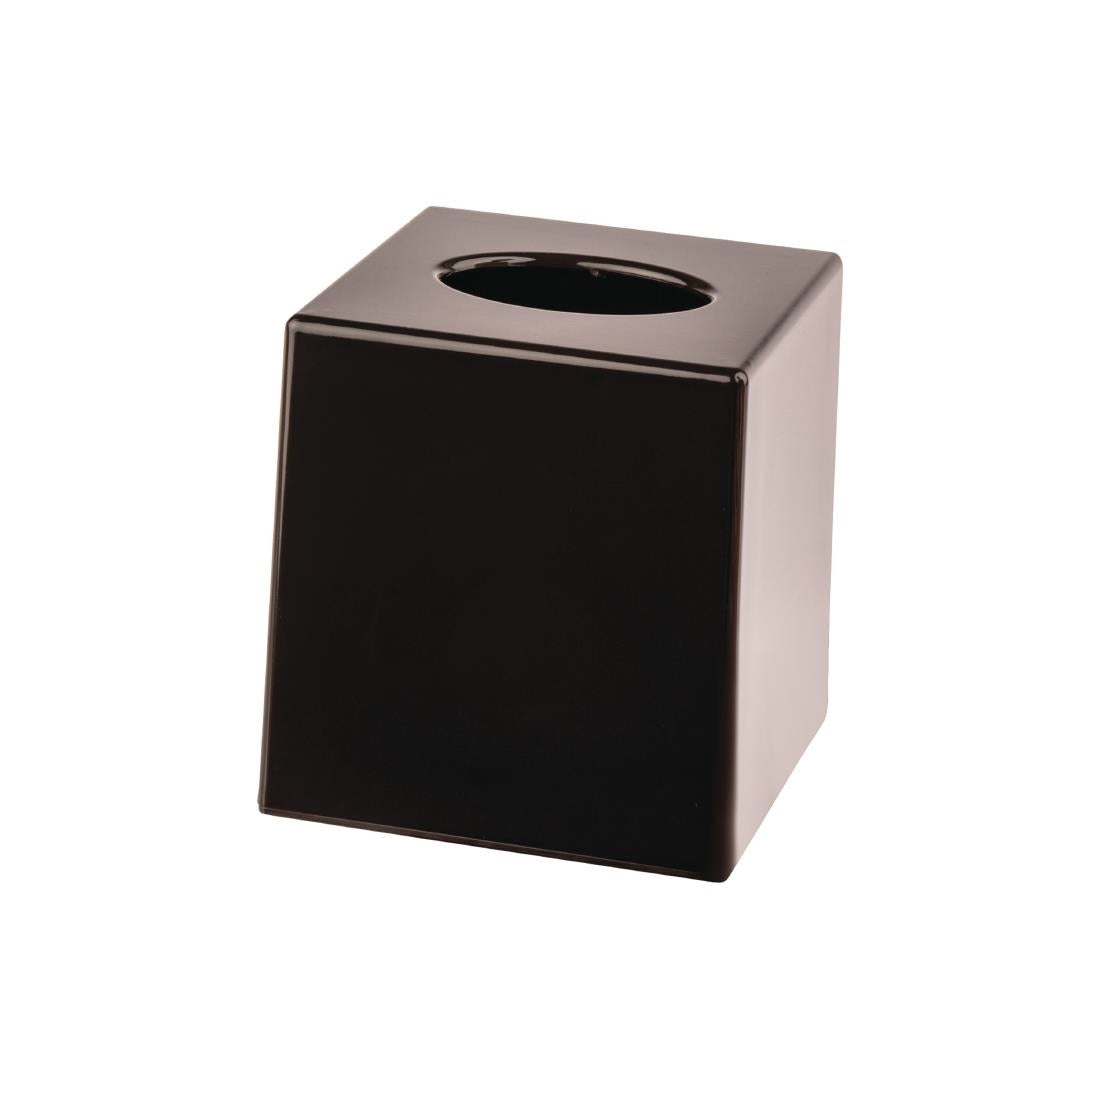 Cube Tissue Holder JD Catering Equipment Solutions Ltd